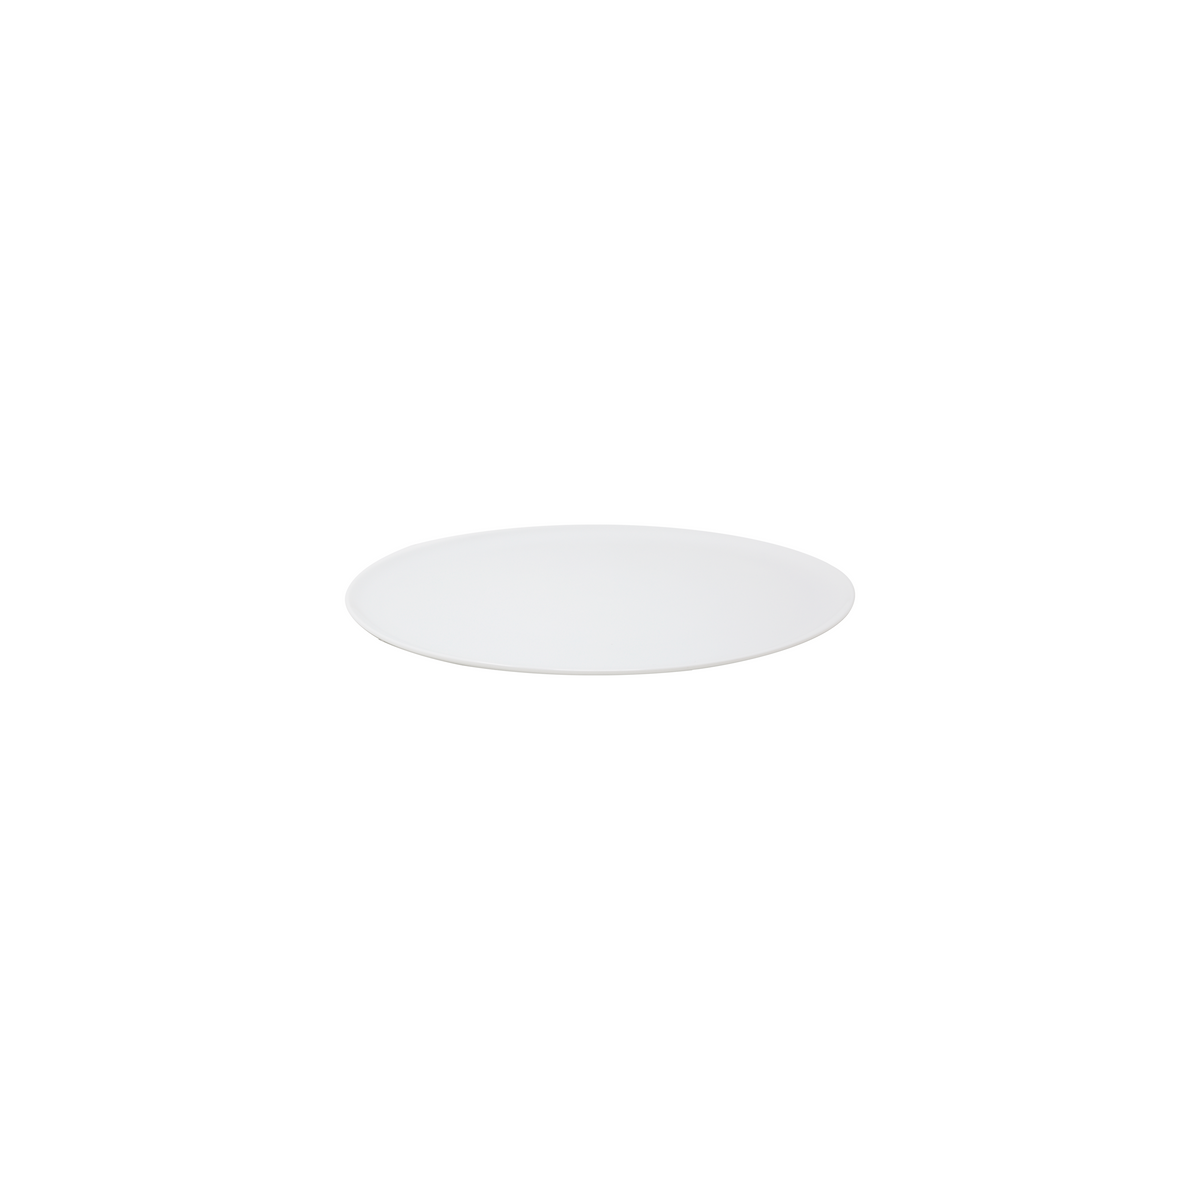 SLIM high-gloss white - Bread plate